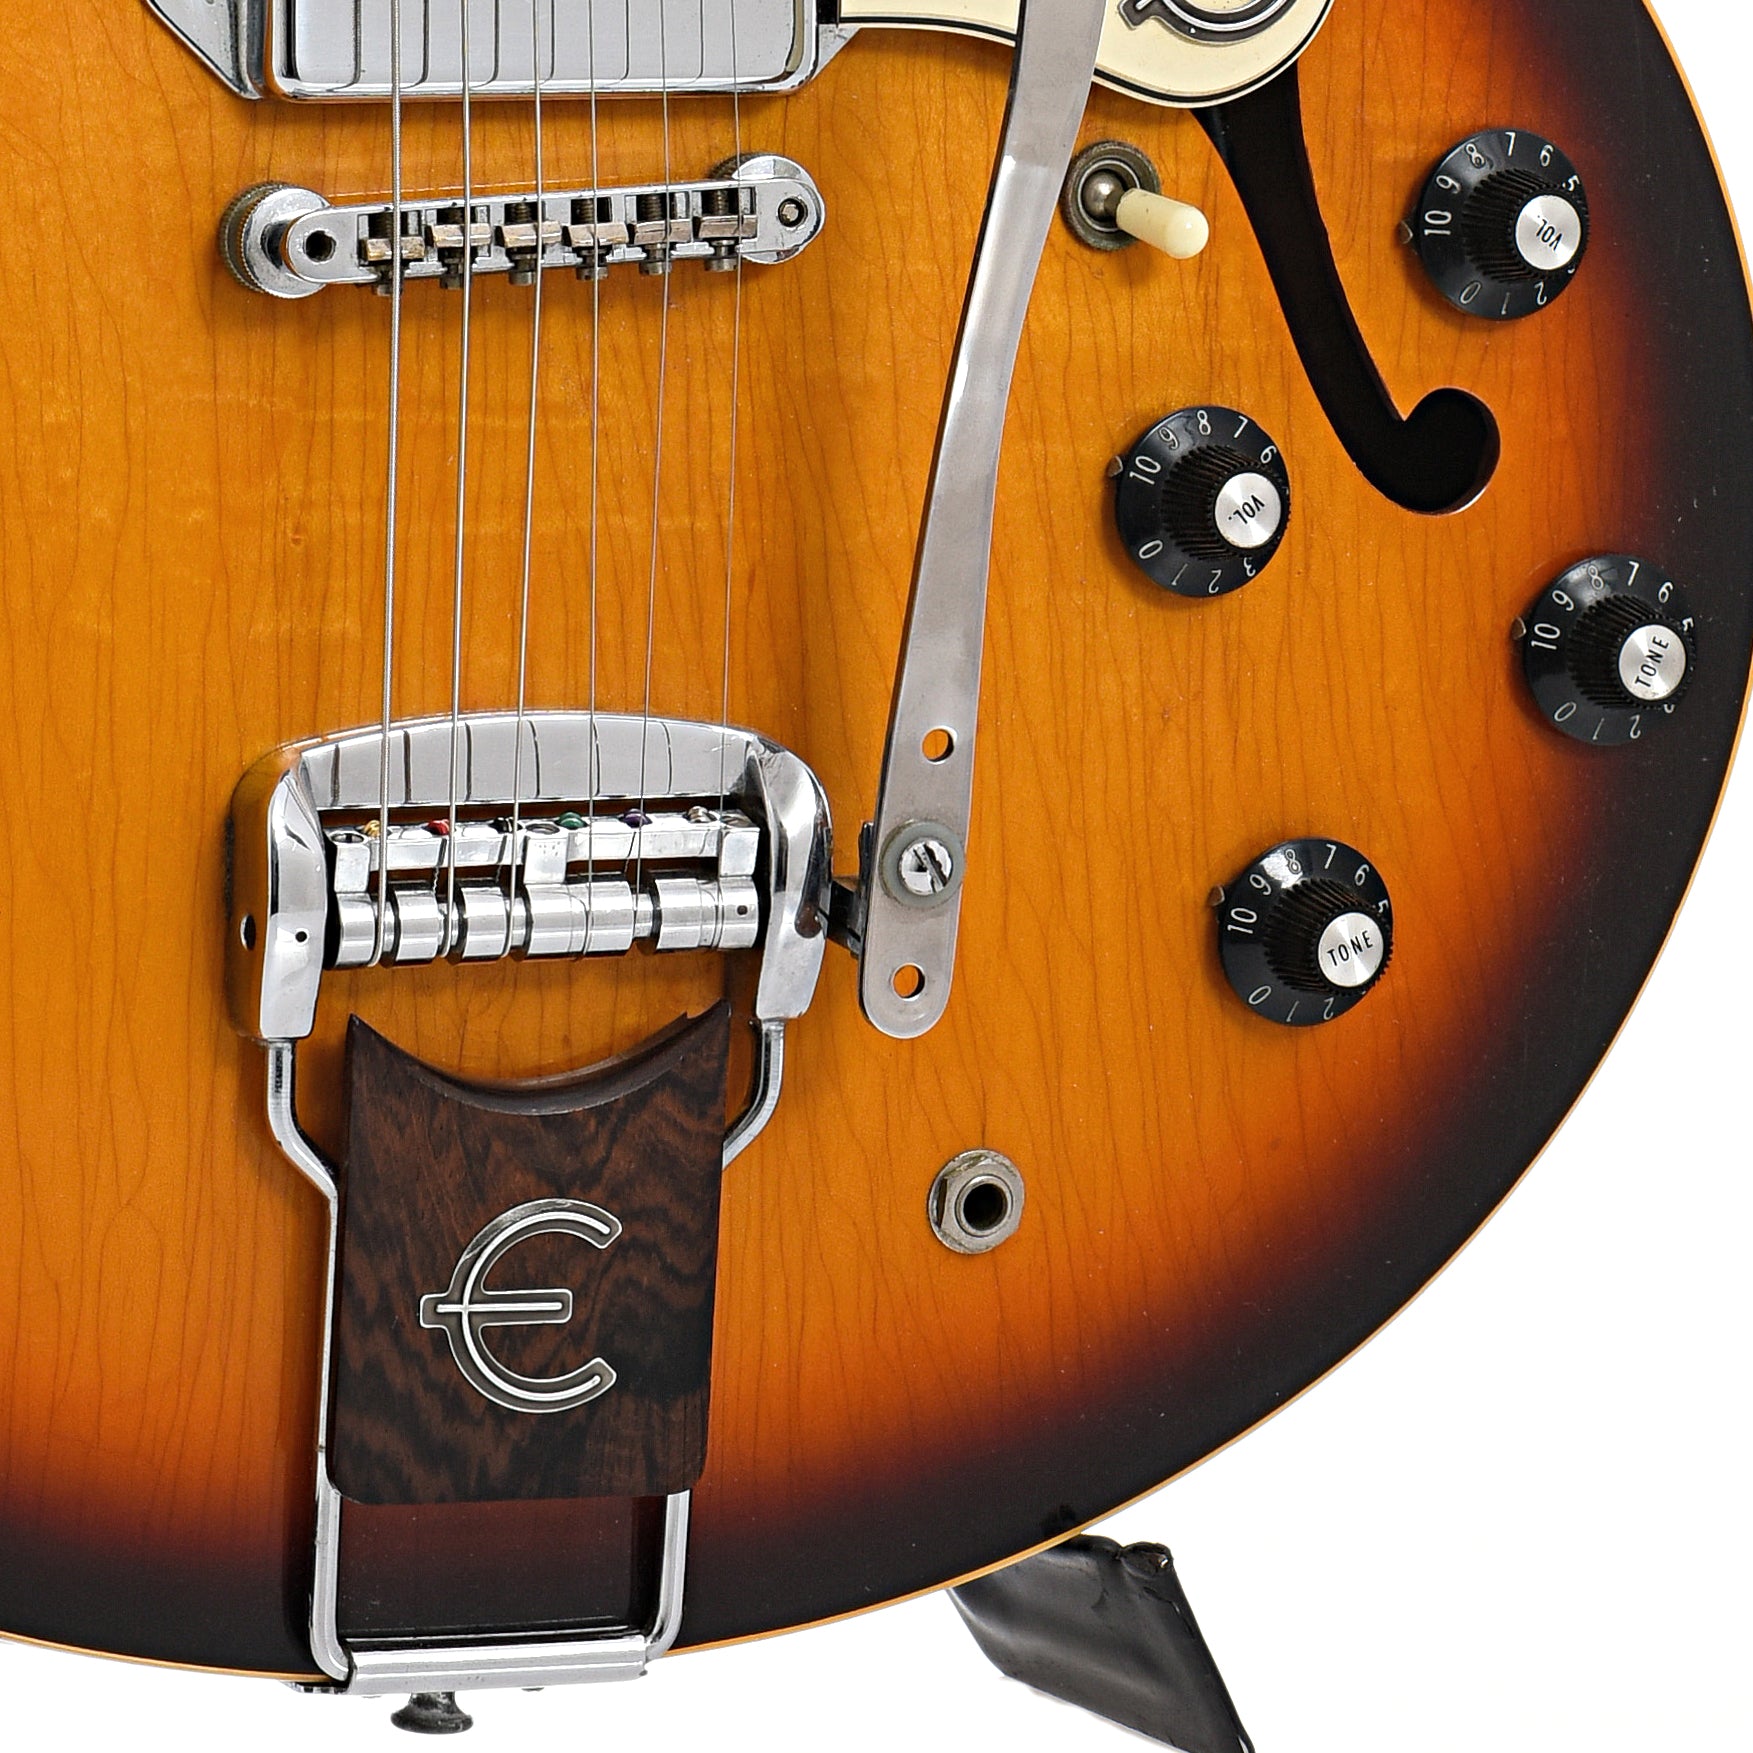 Tailpiece, bridge and controls of Epiphone E230TD Casino Hollowbody Electric Guitar (1967)